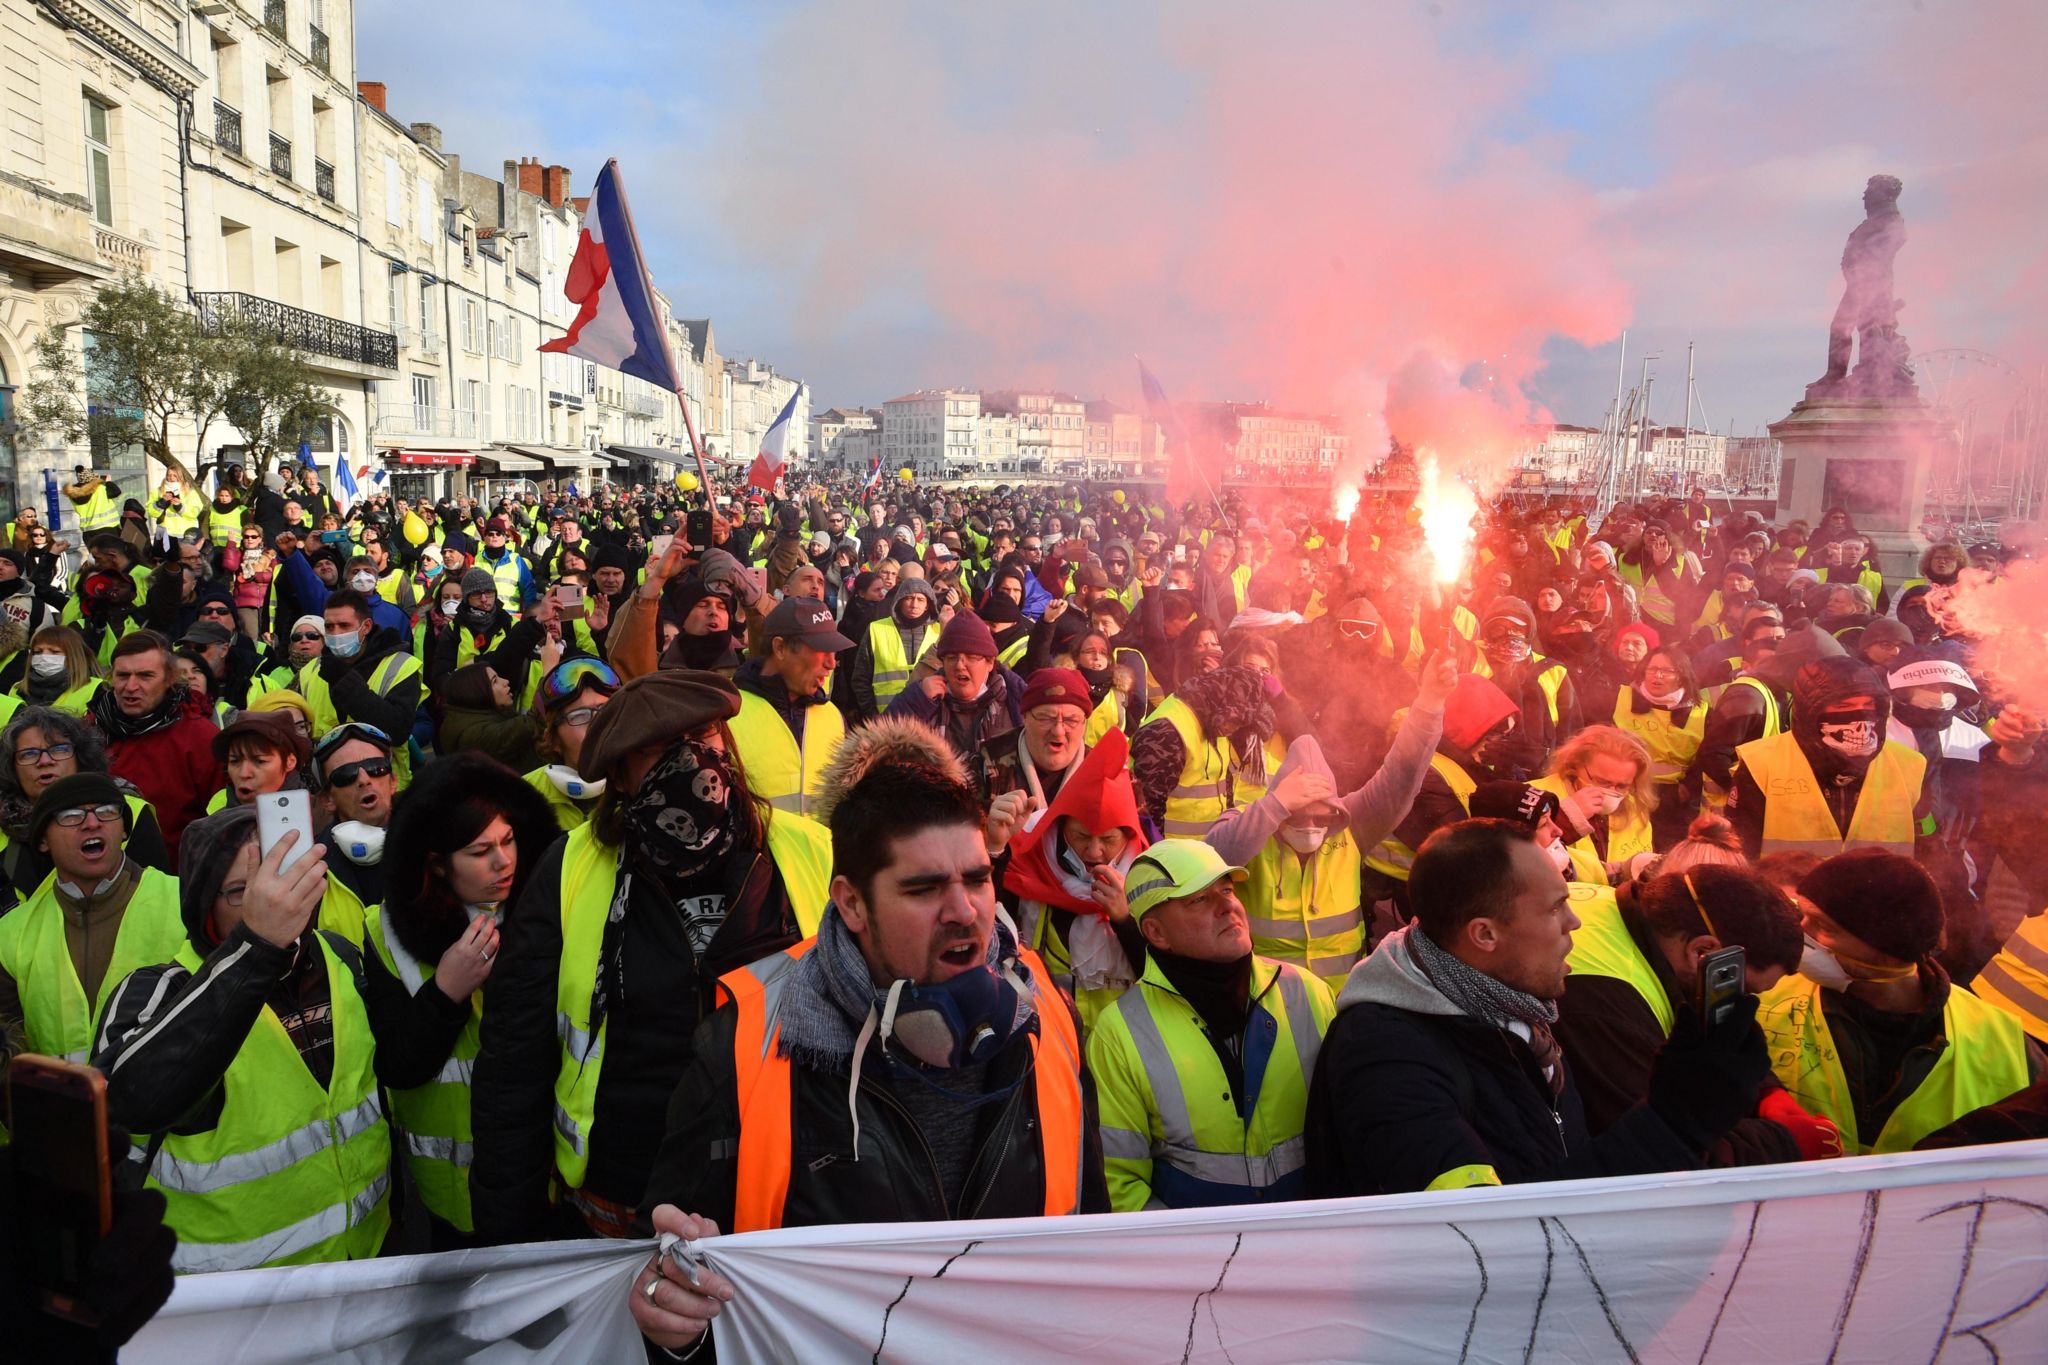 Protest in La Rochelle on 5 January 2019